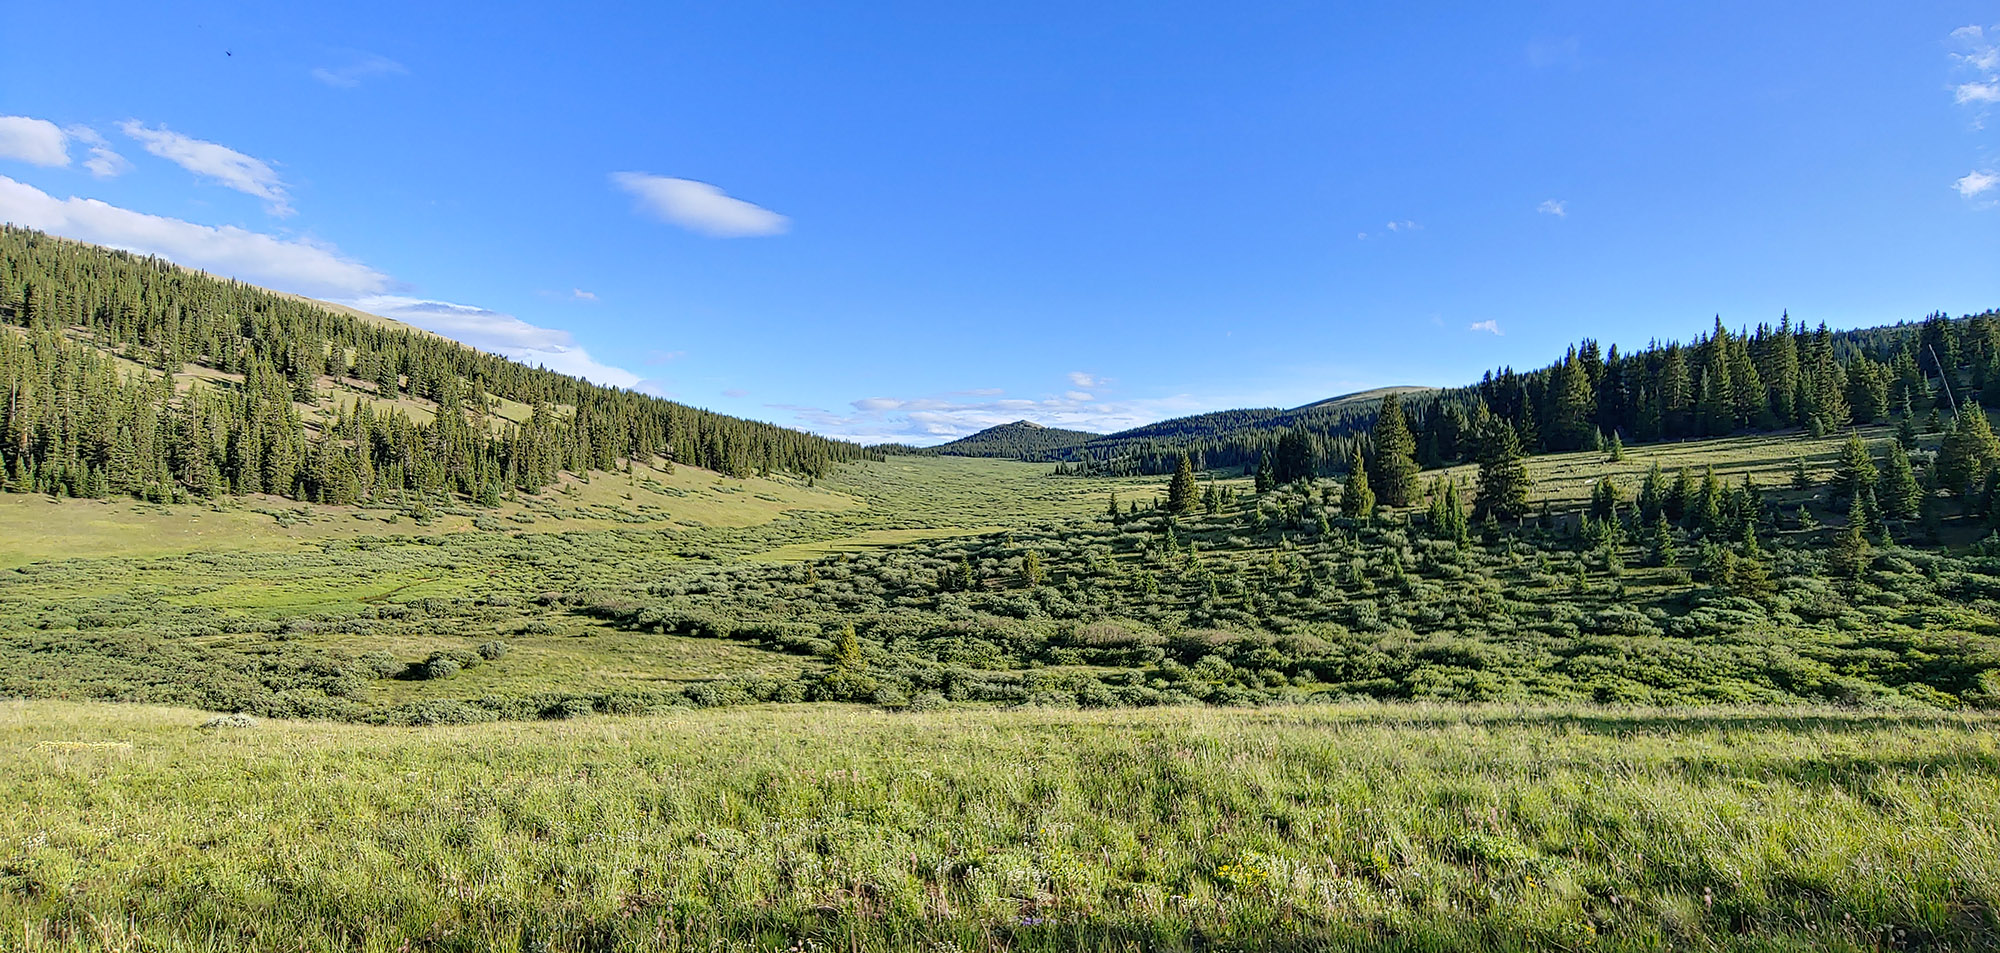 Landscape photo of vegetated green rolling hills